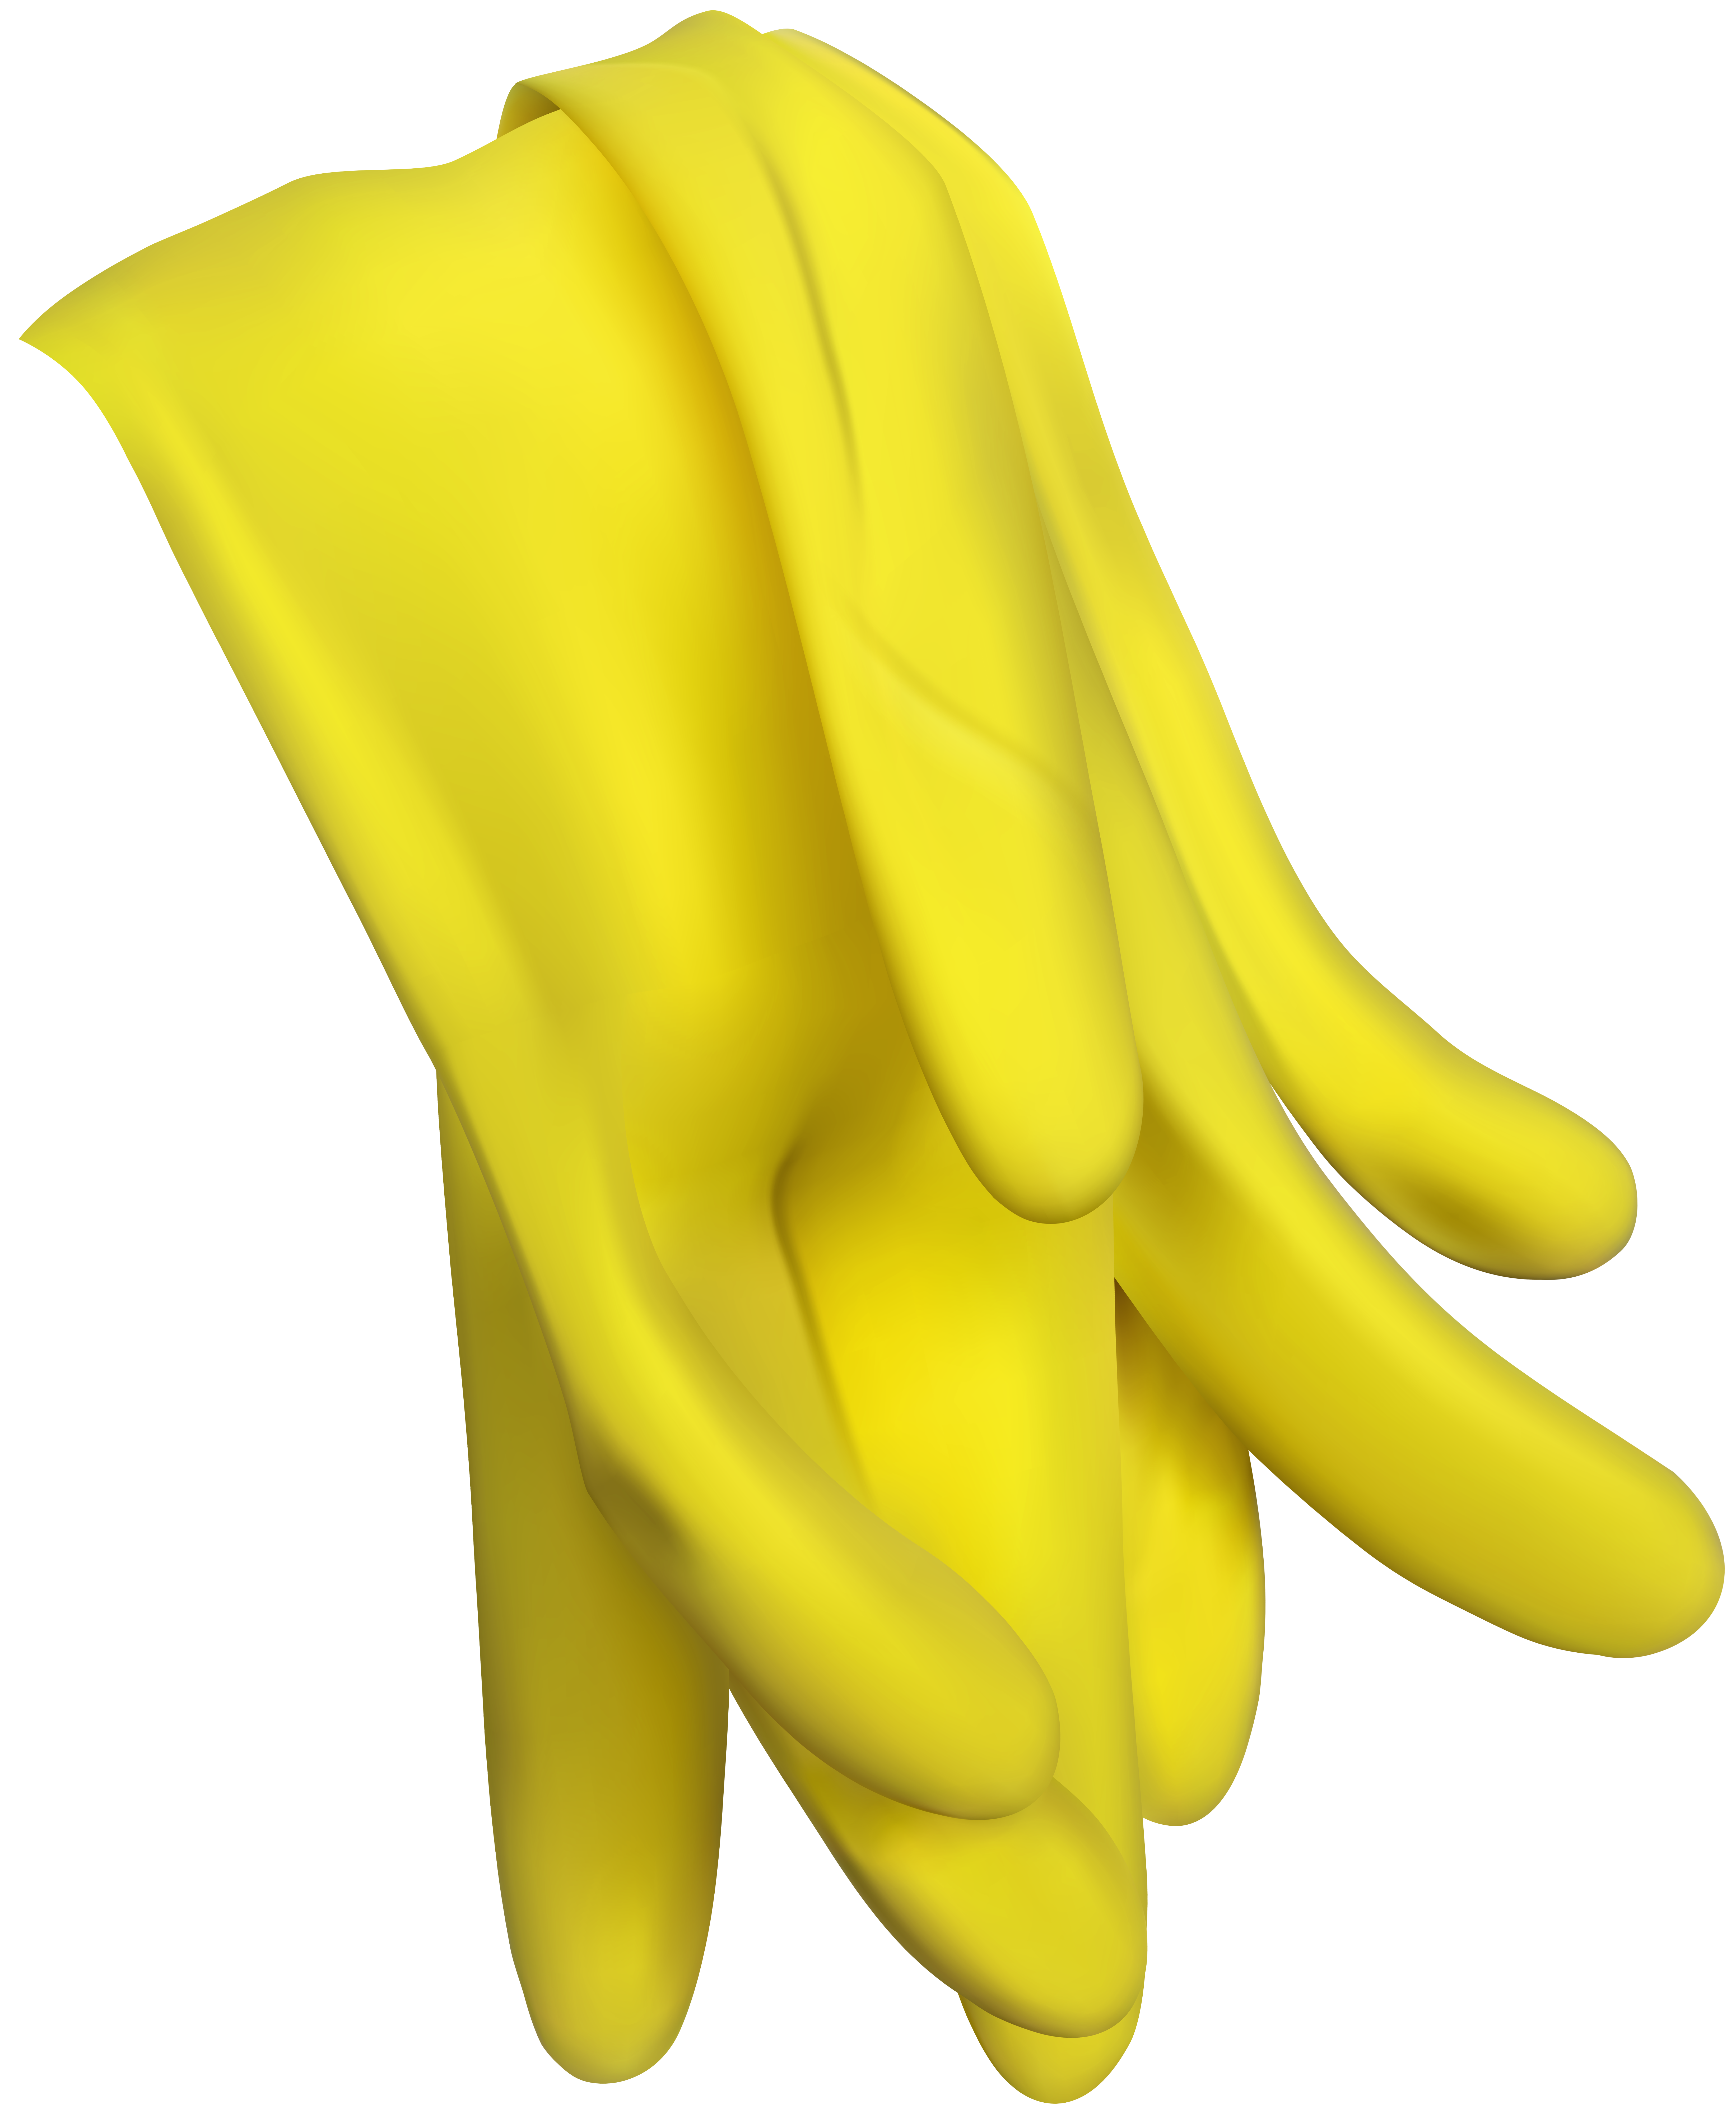 Yellow Latex Glove PNG Clip Art.